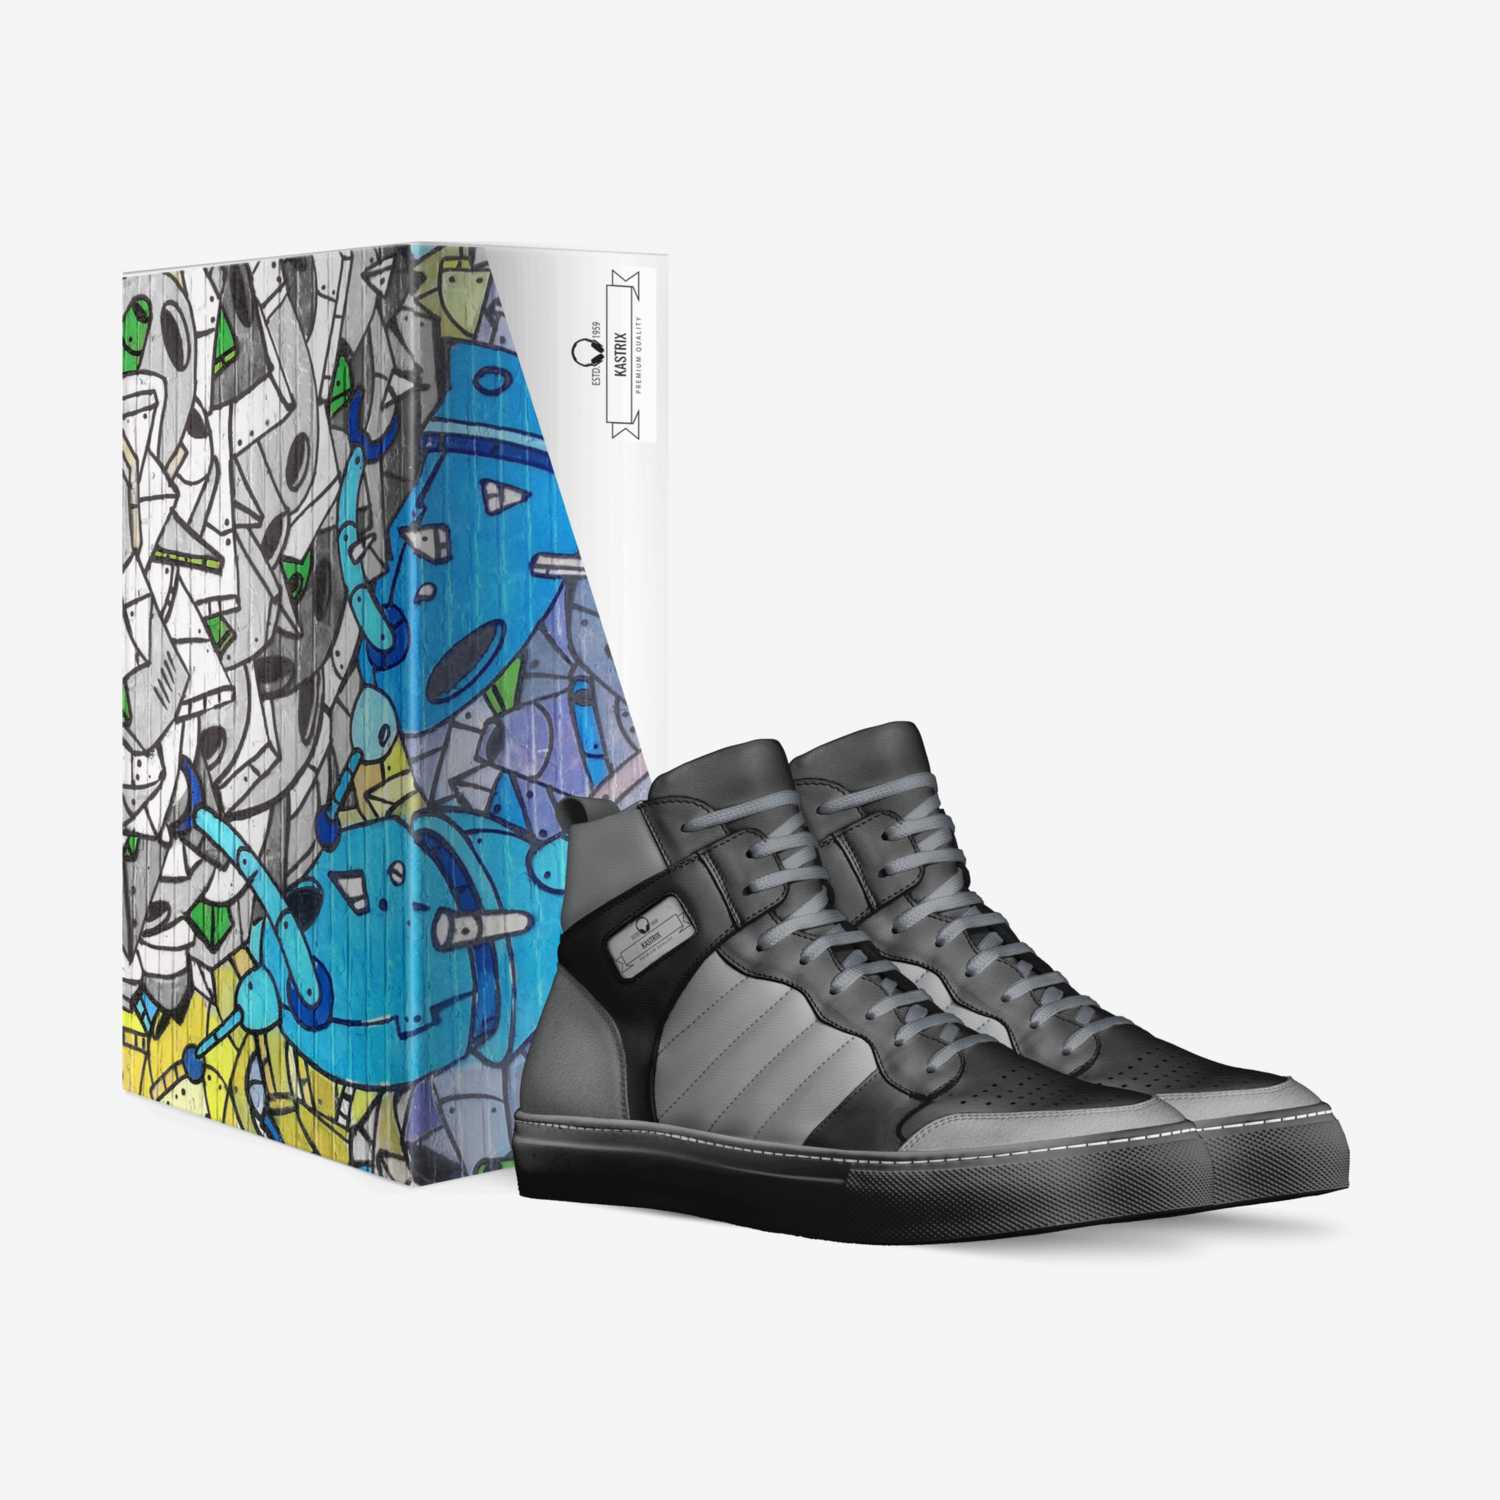 KASTRIX custom made in Italy shoes by Oren Krurmei | Box view